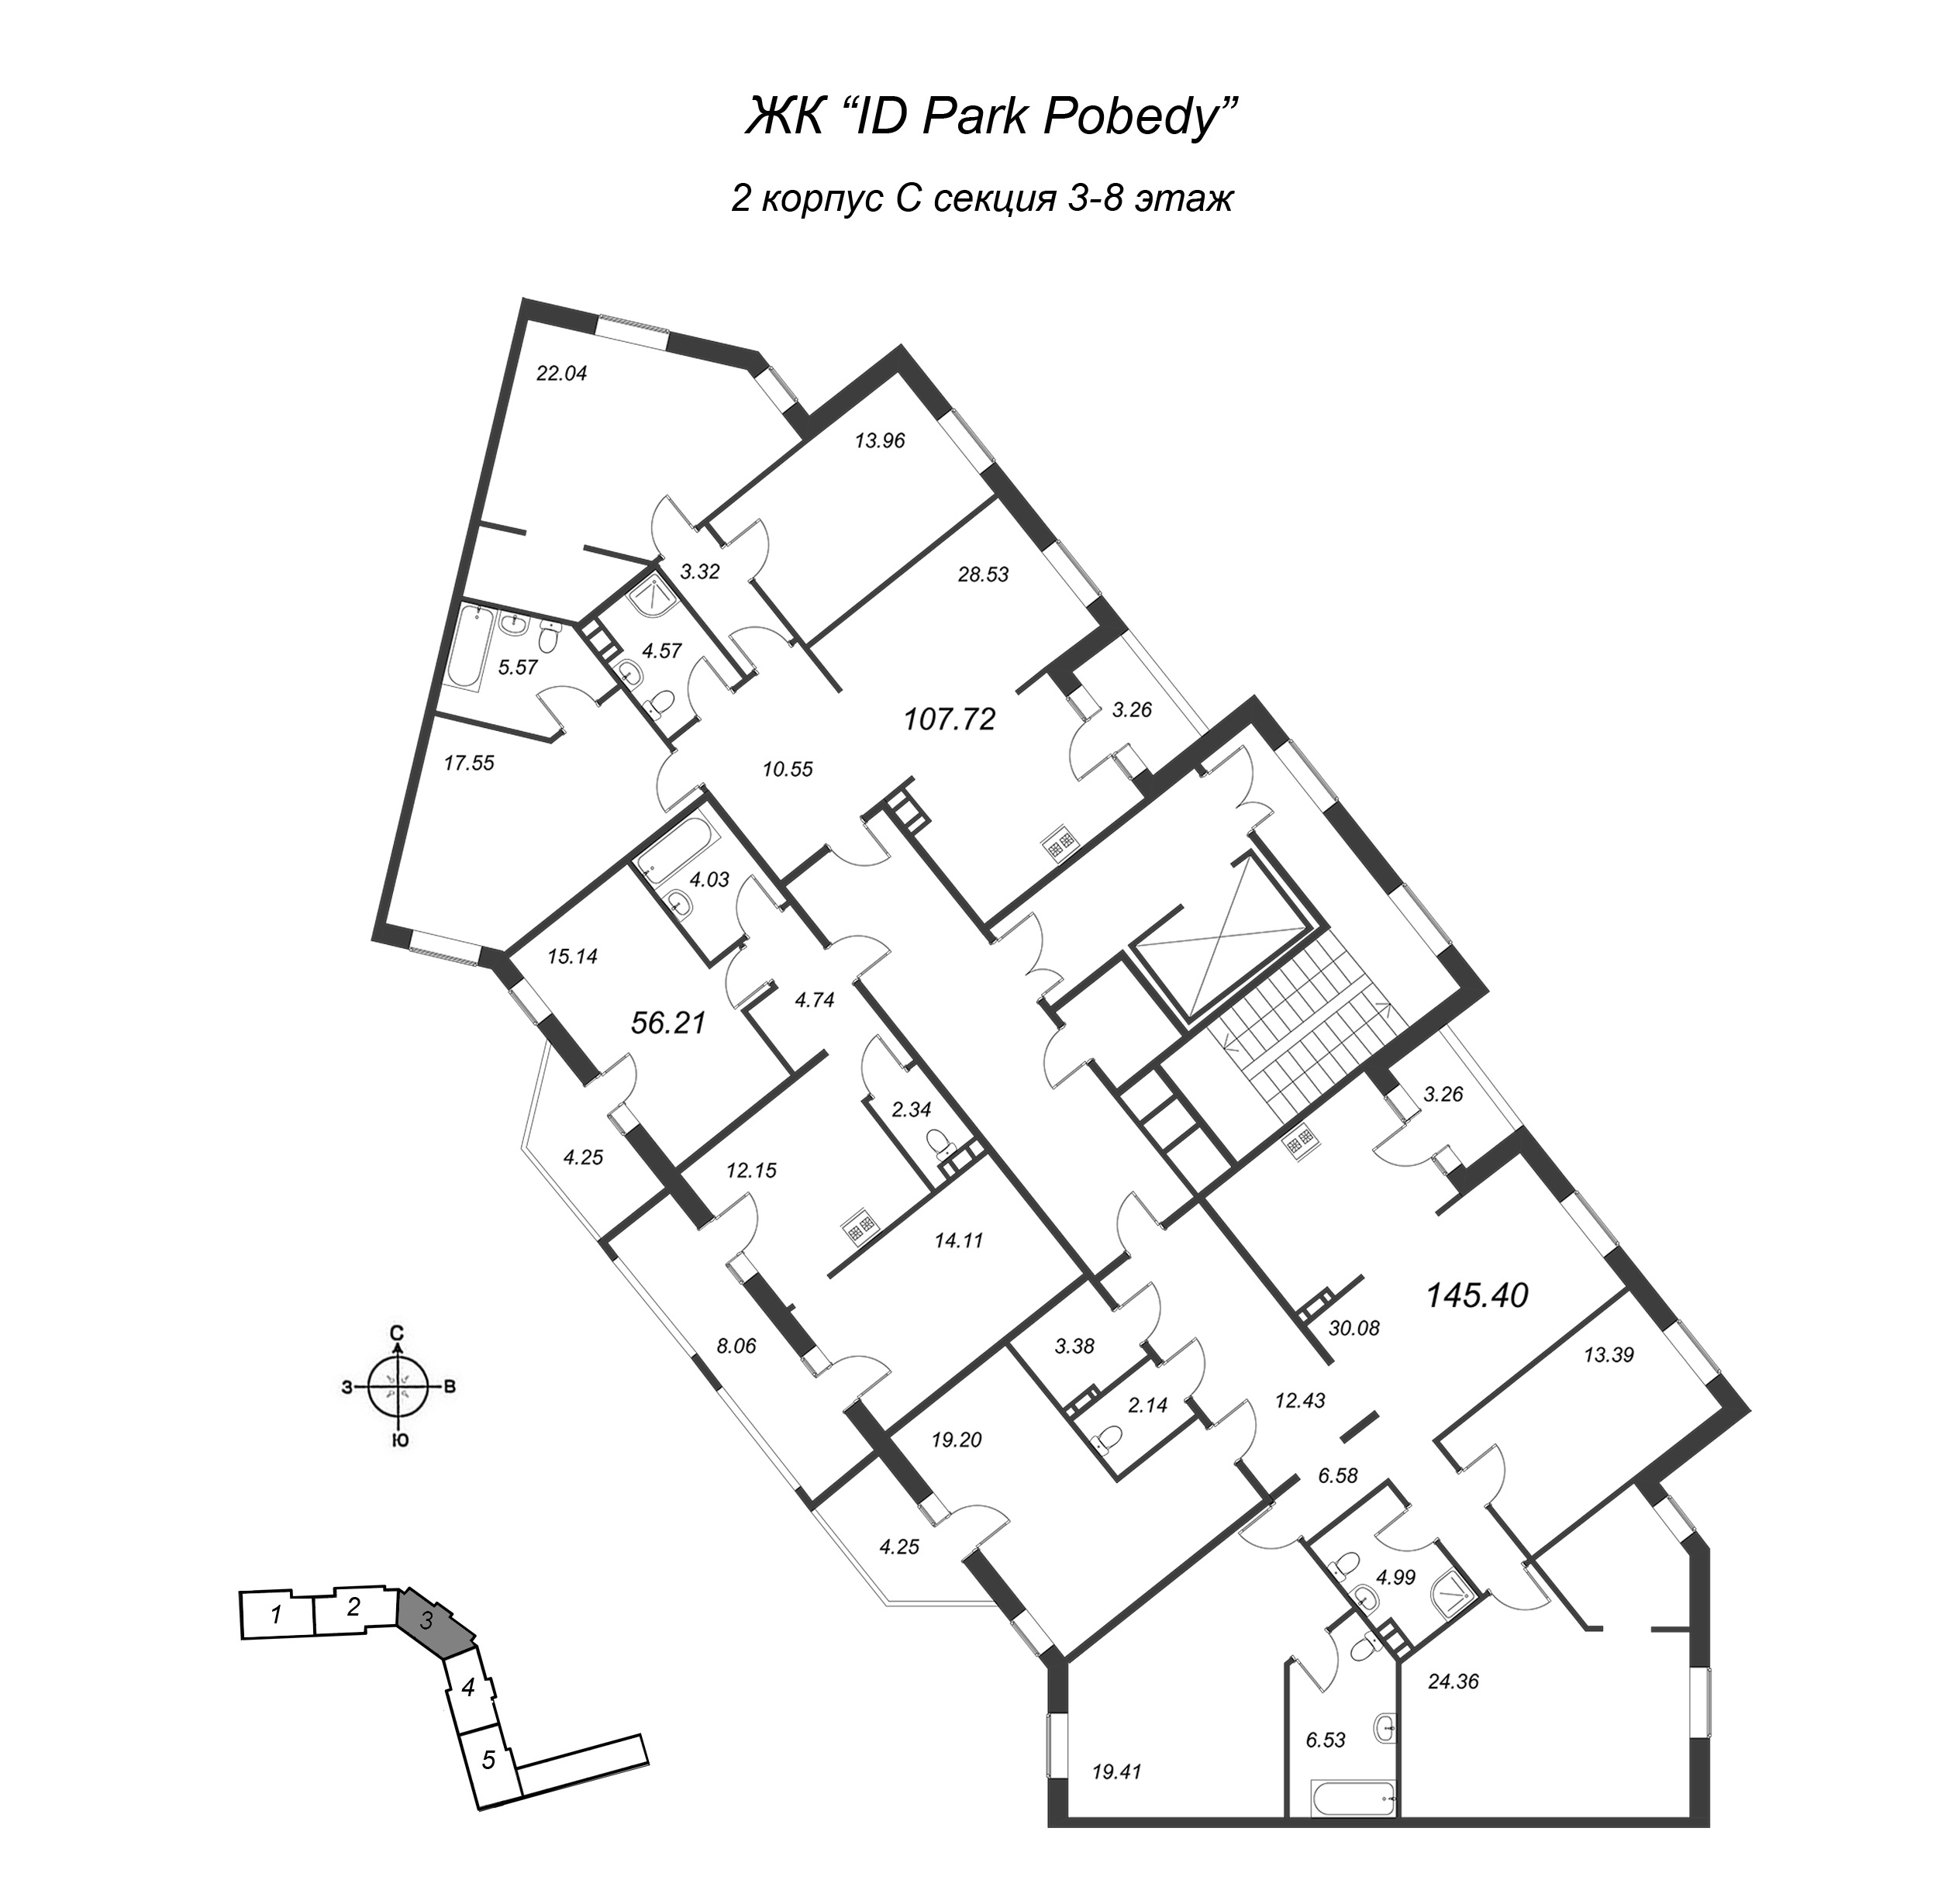 4-комнатная (Евро) квартира, 107.72 м² в ЖК "ID Park Pobedy" - планировка этажа